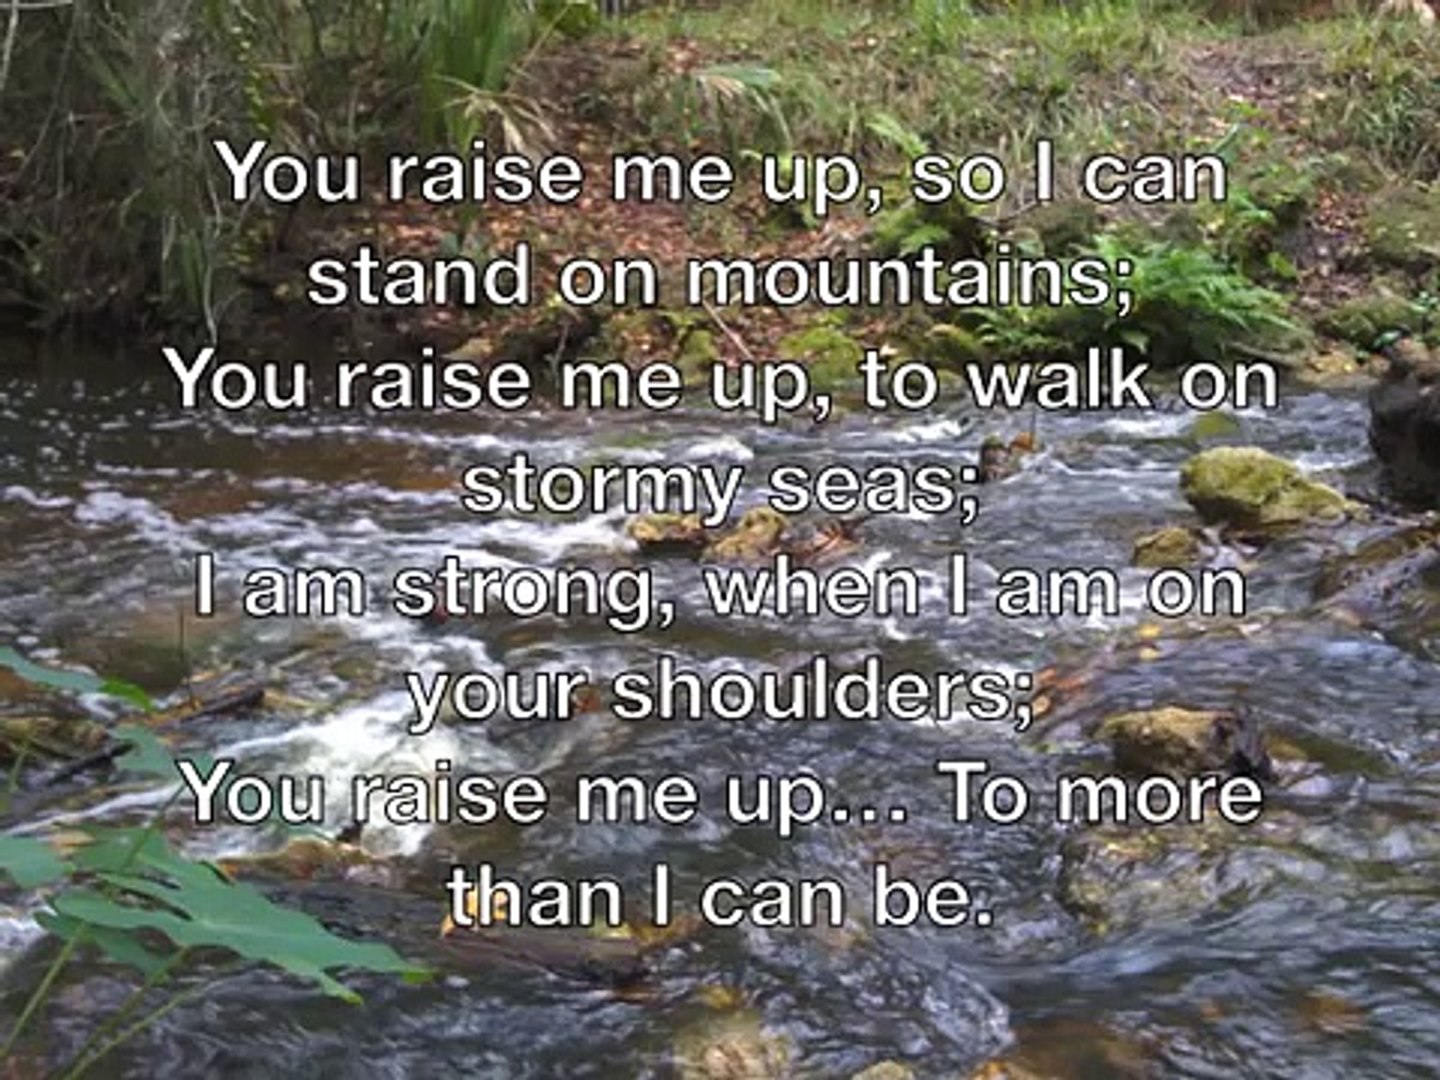 you raise me up - josh groban with lyrics - video Dailymotion